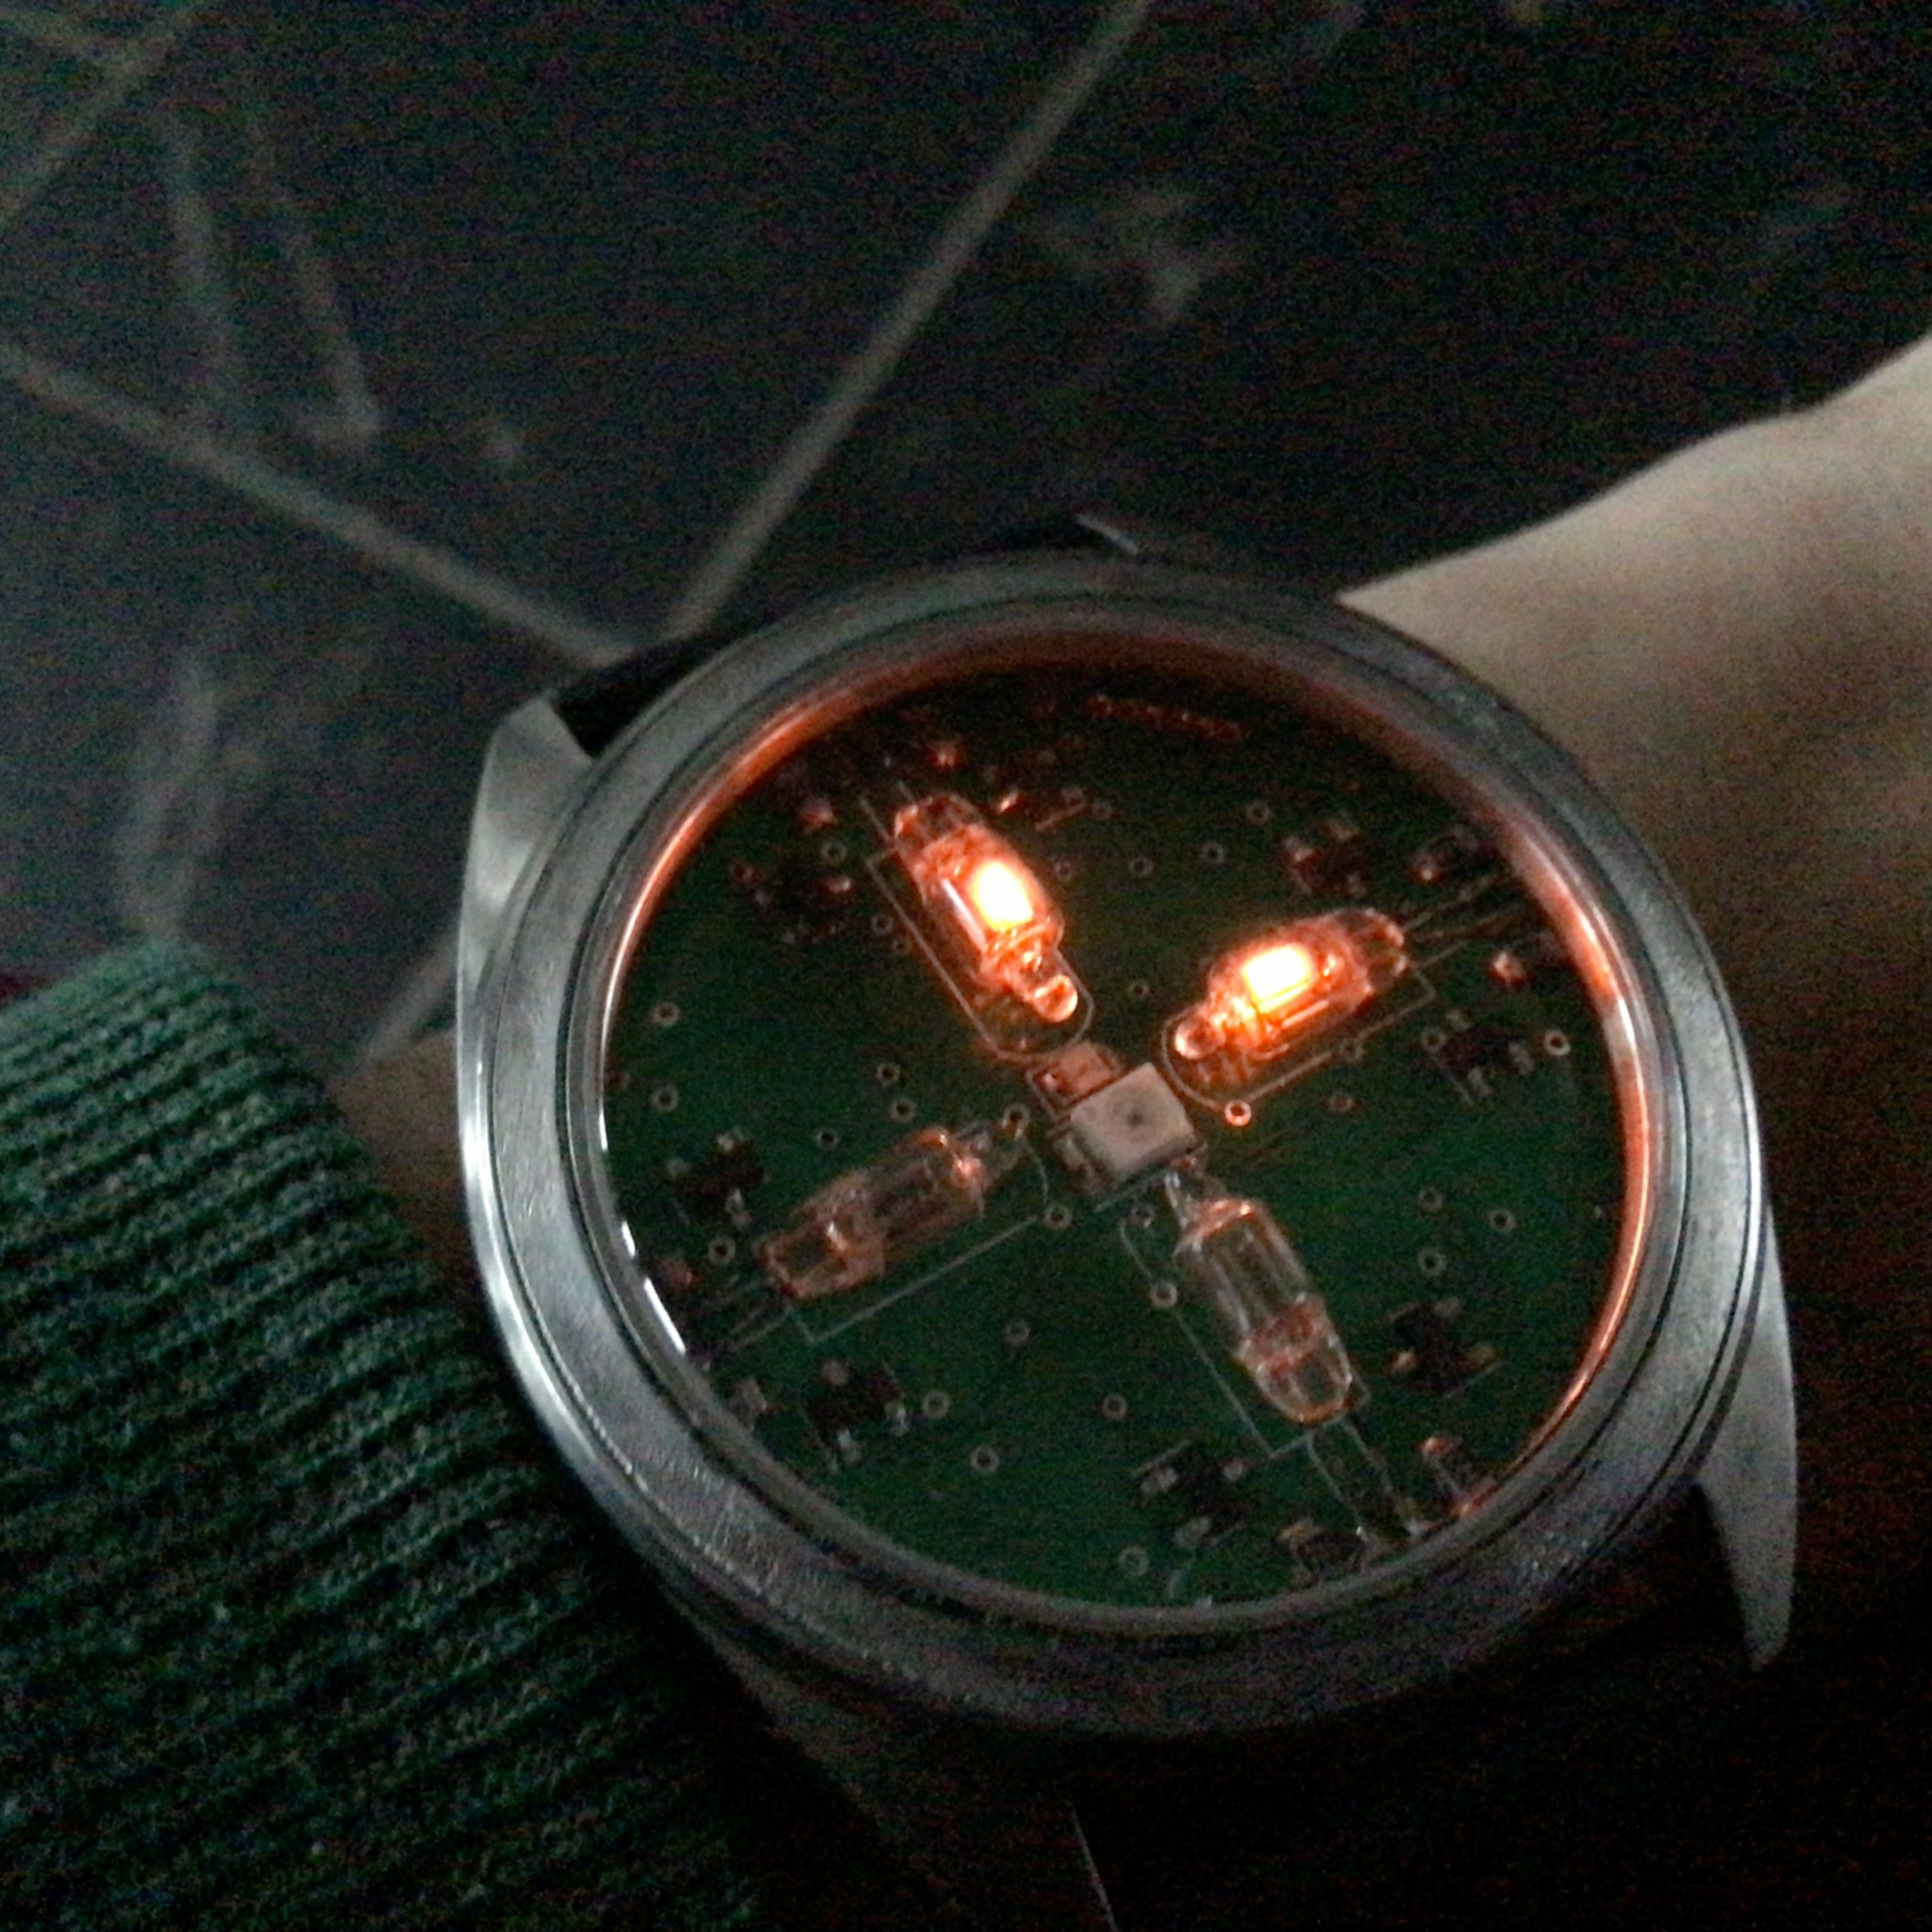 Neon watch